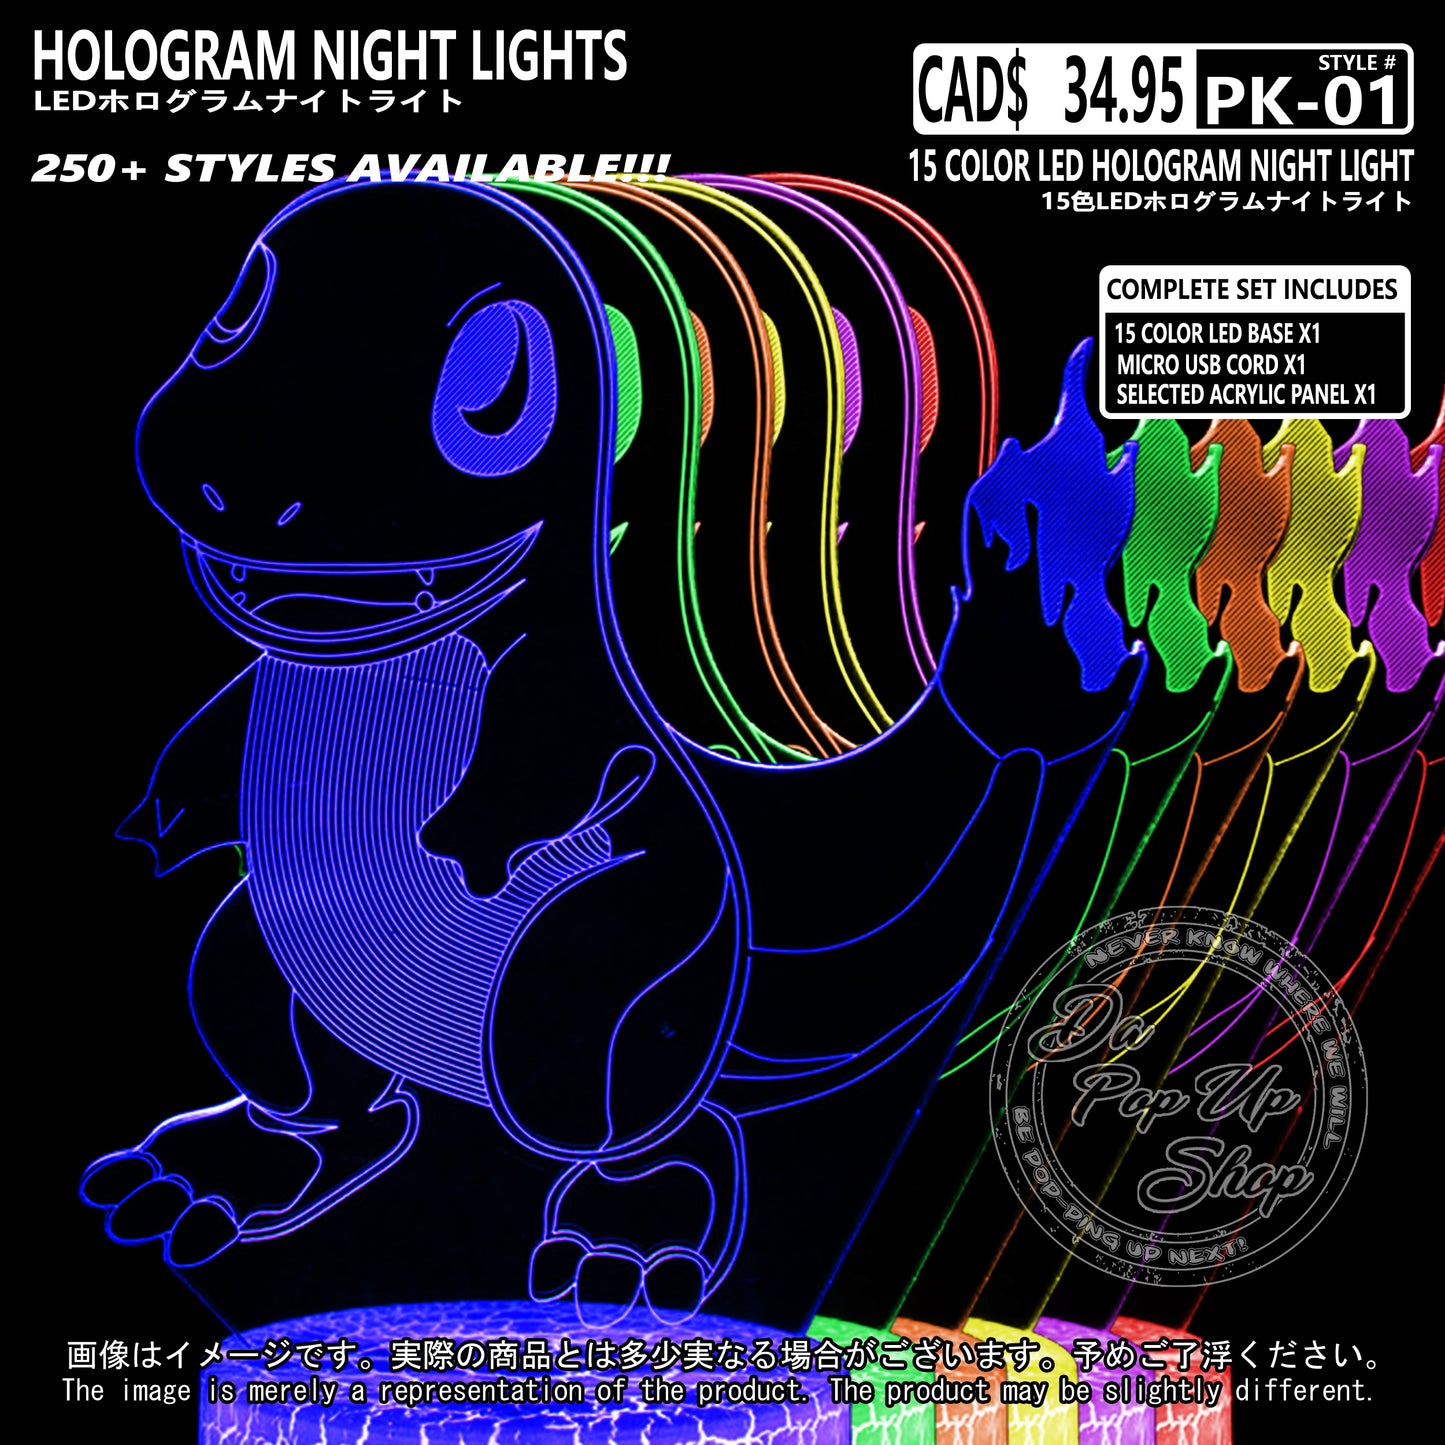 (PKM-01) CHARMANDER Pokemon Hologram LED Night Light